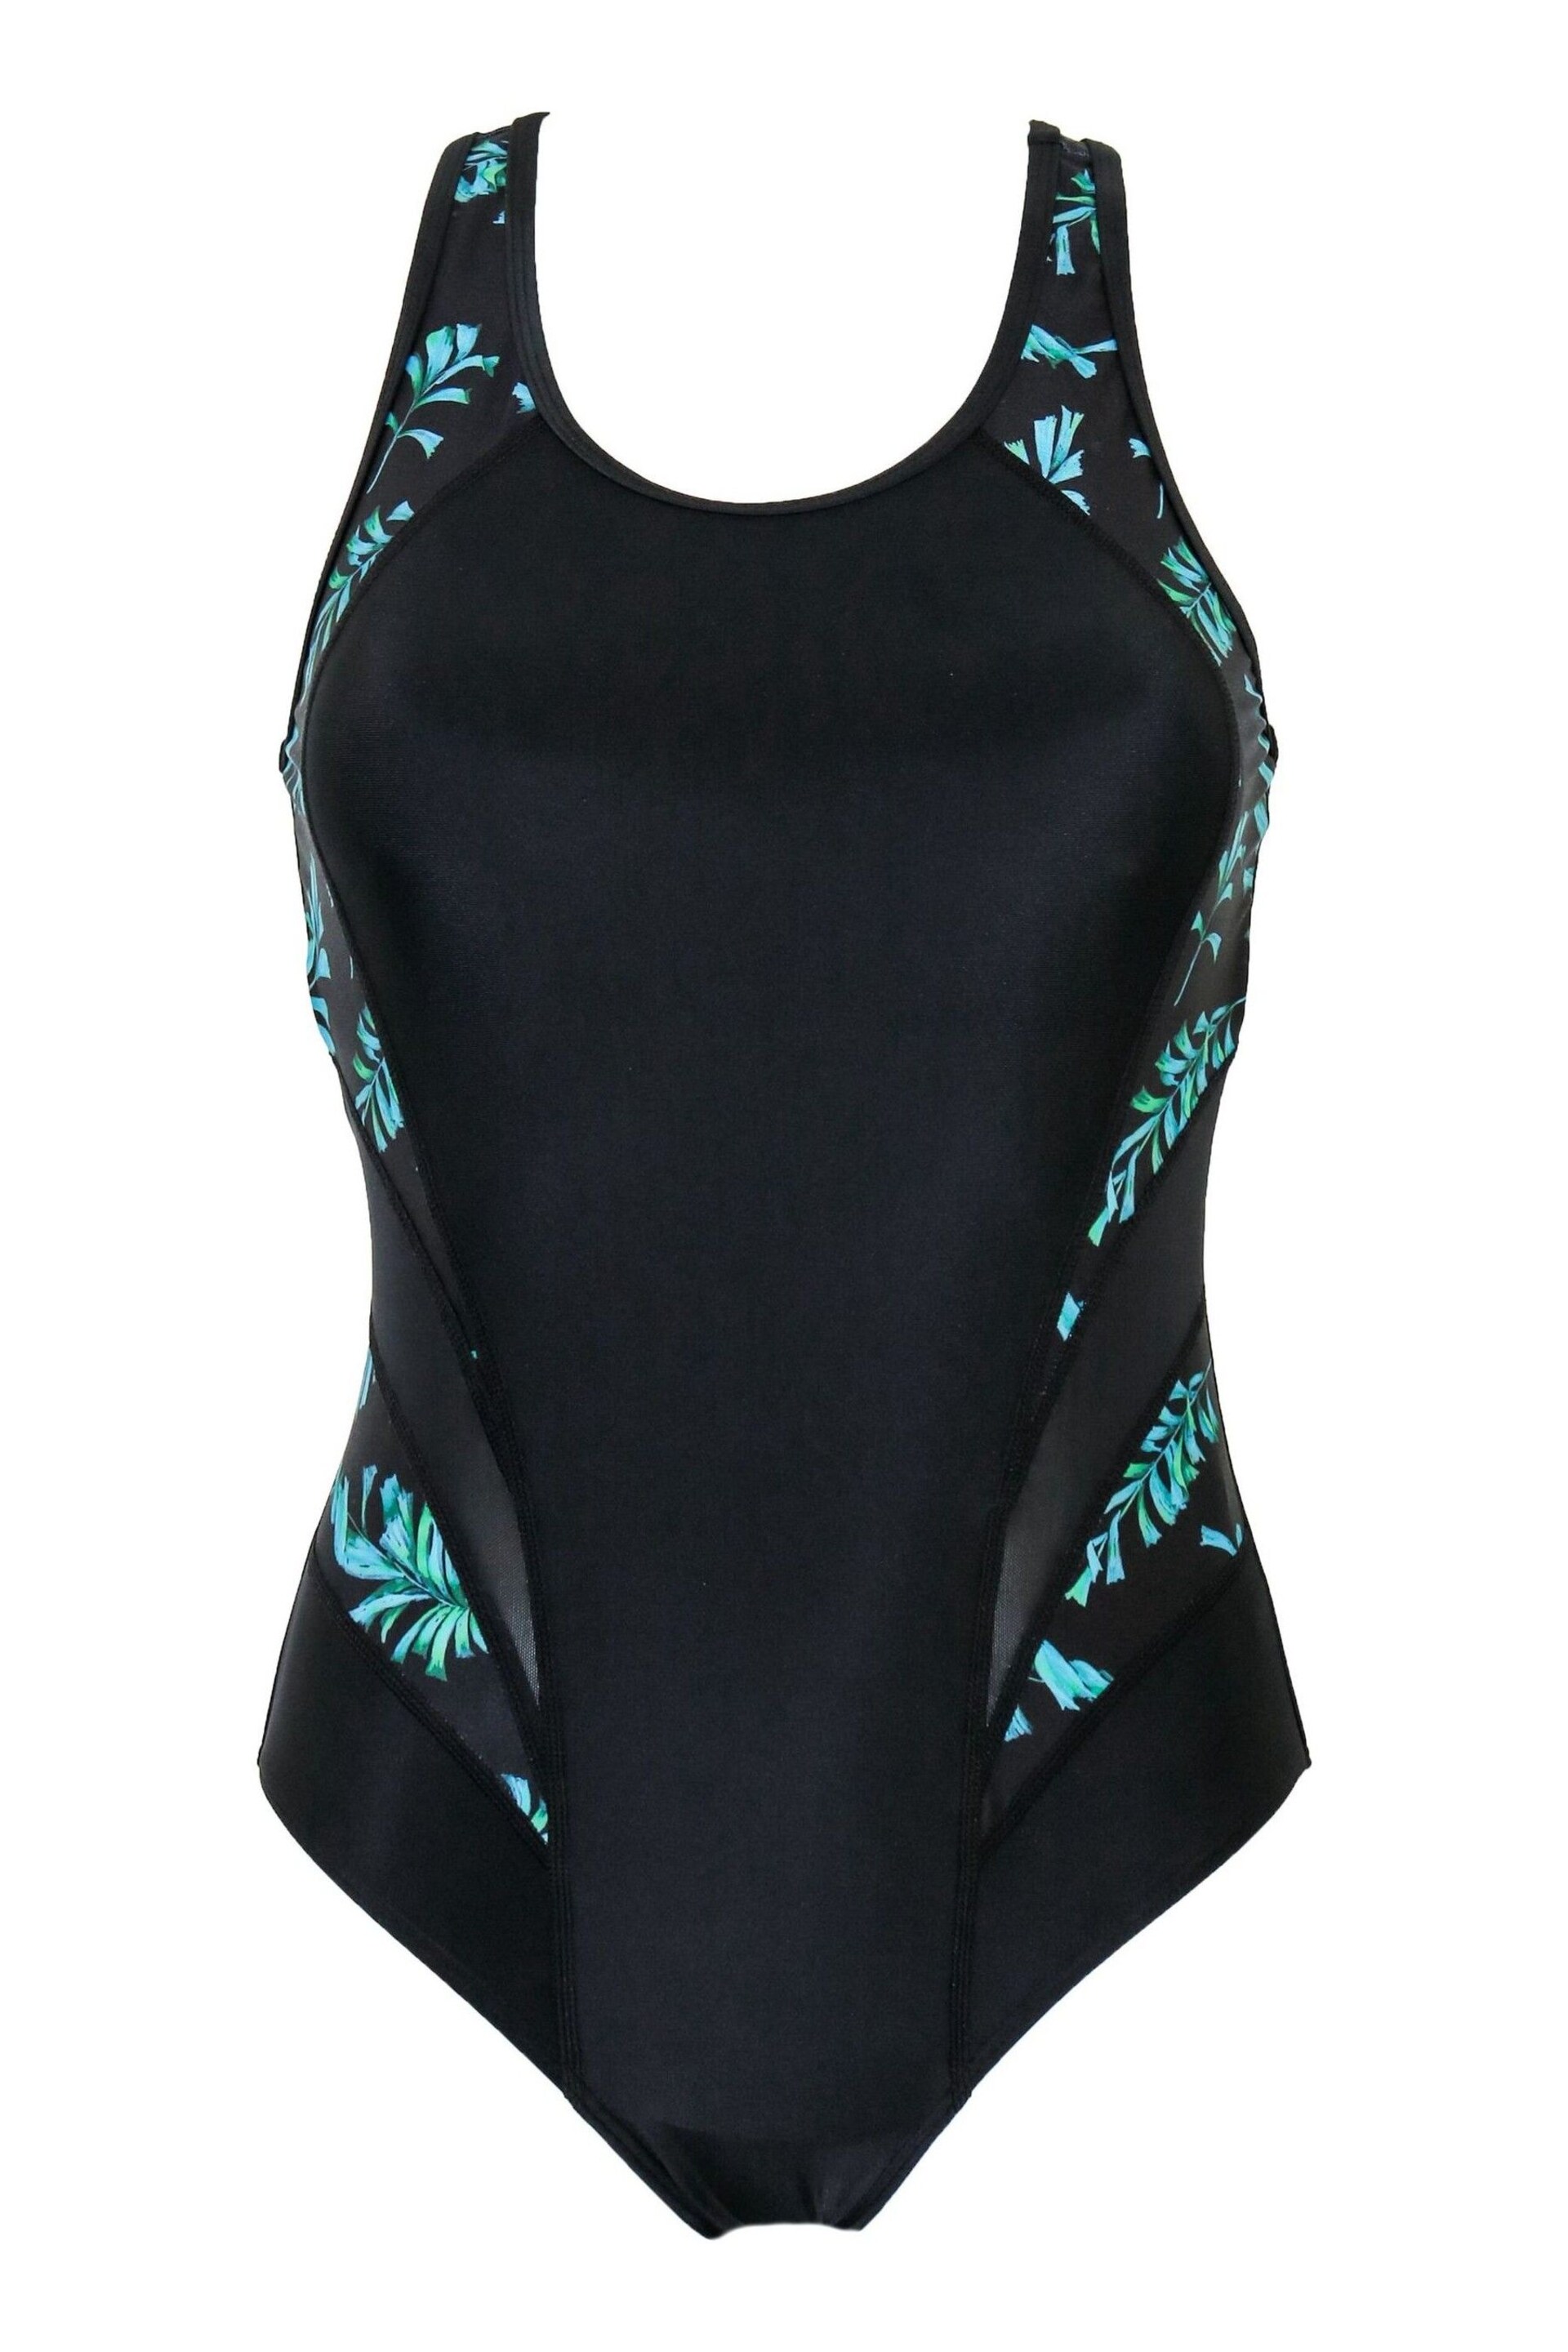 Pour Moi Black & Blue Energy Chlorine Resistant Swimsuit - Image 3 of 4